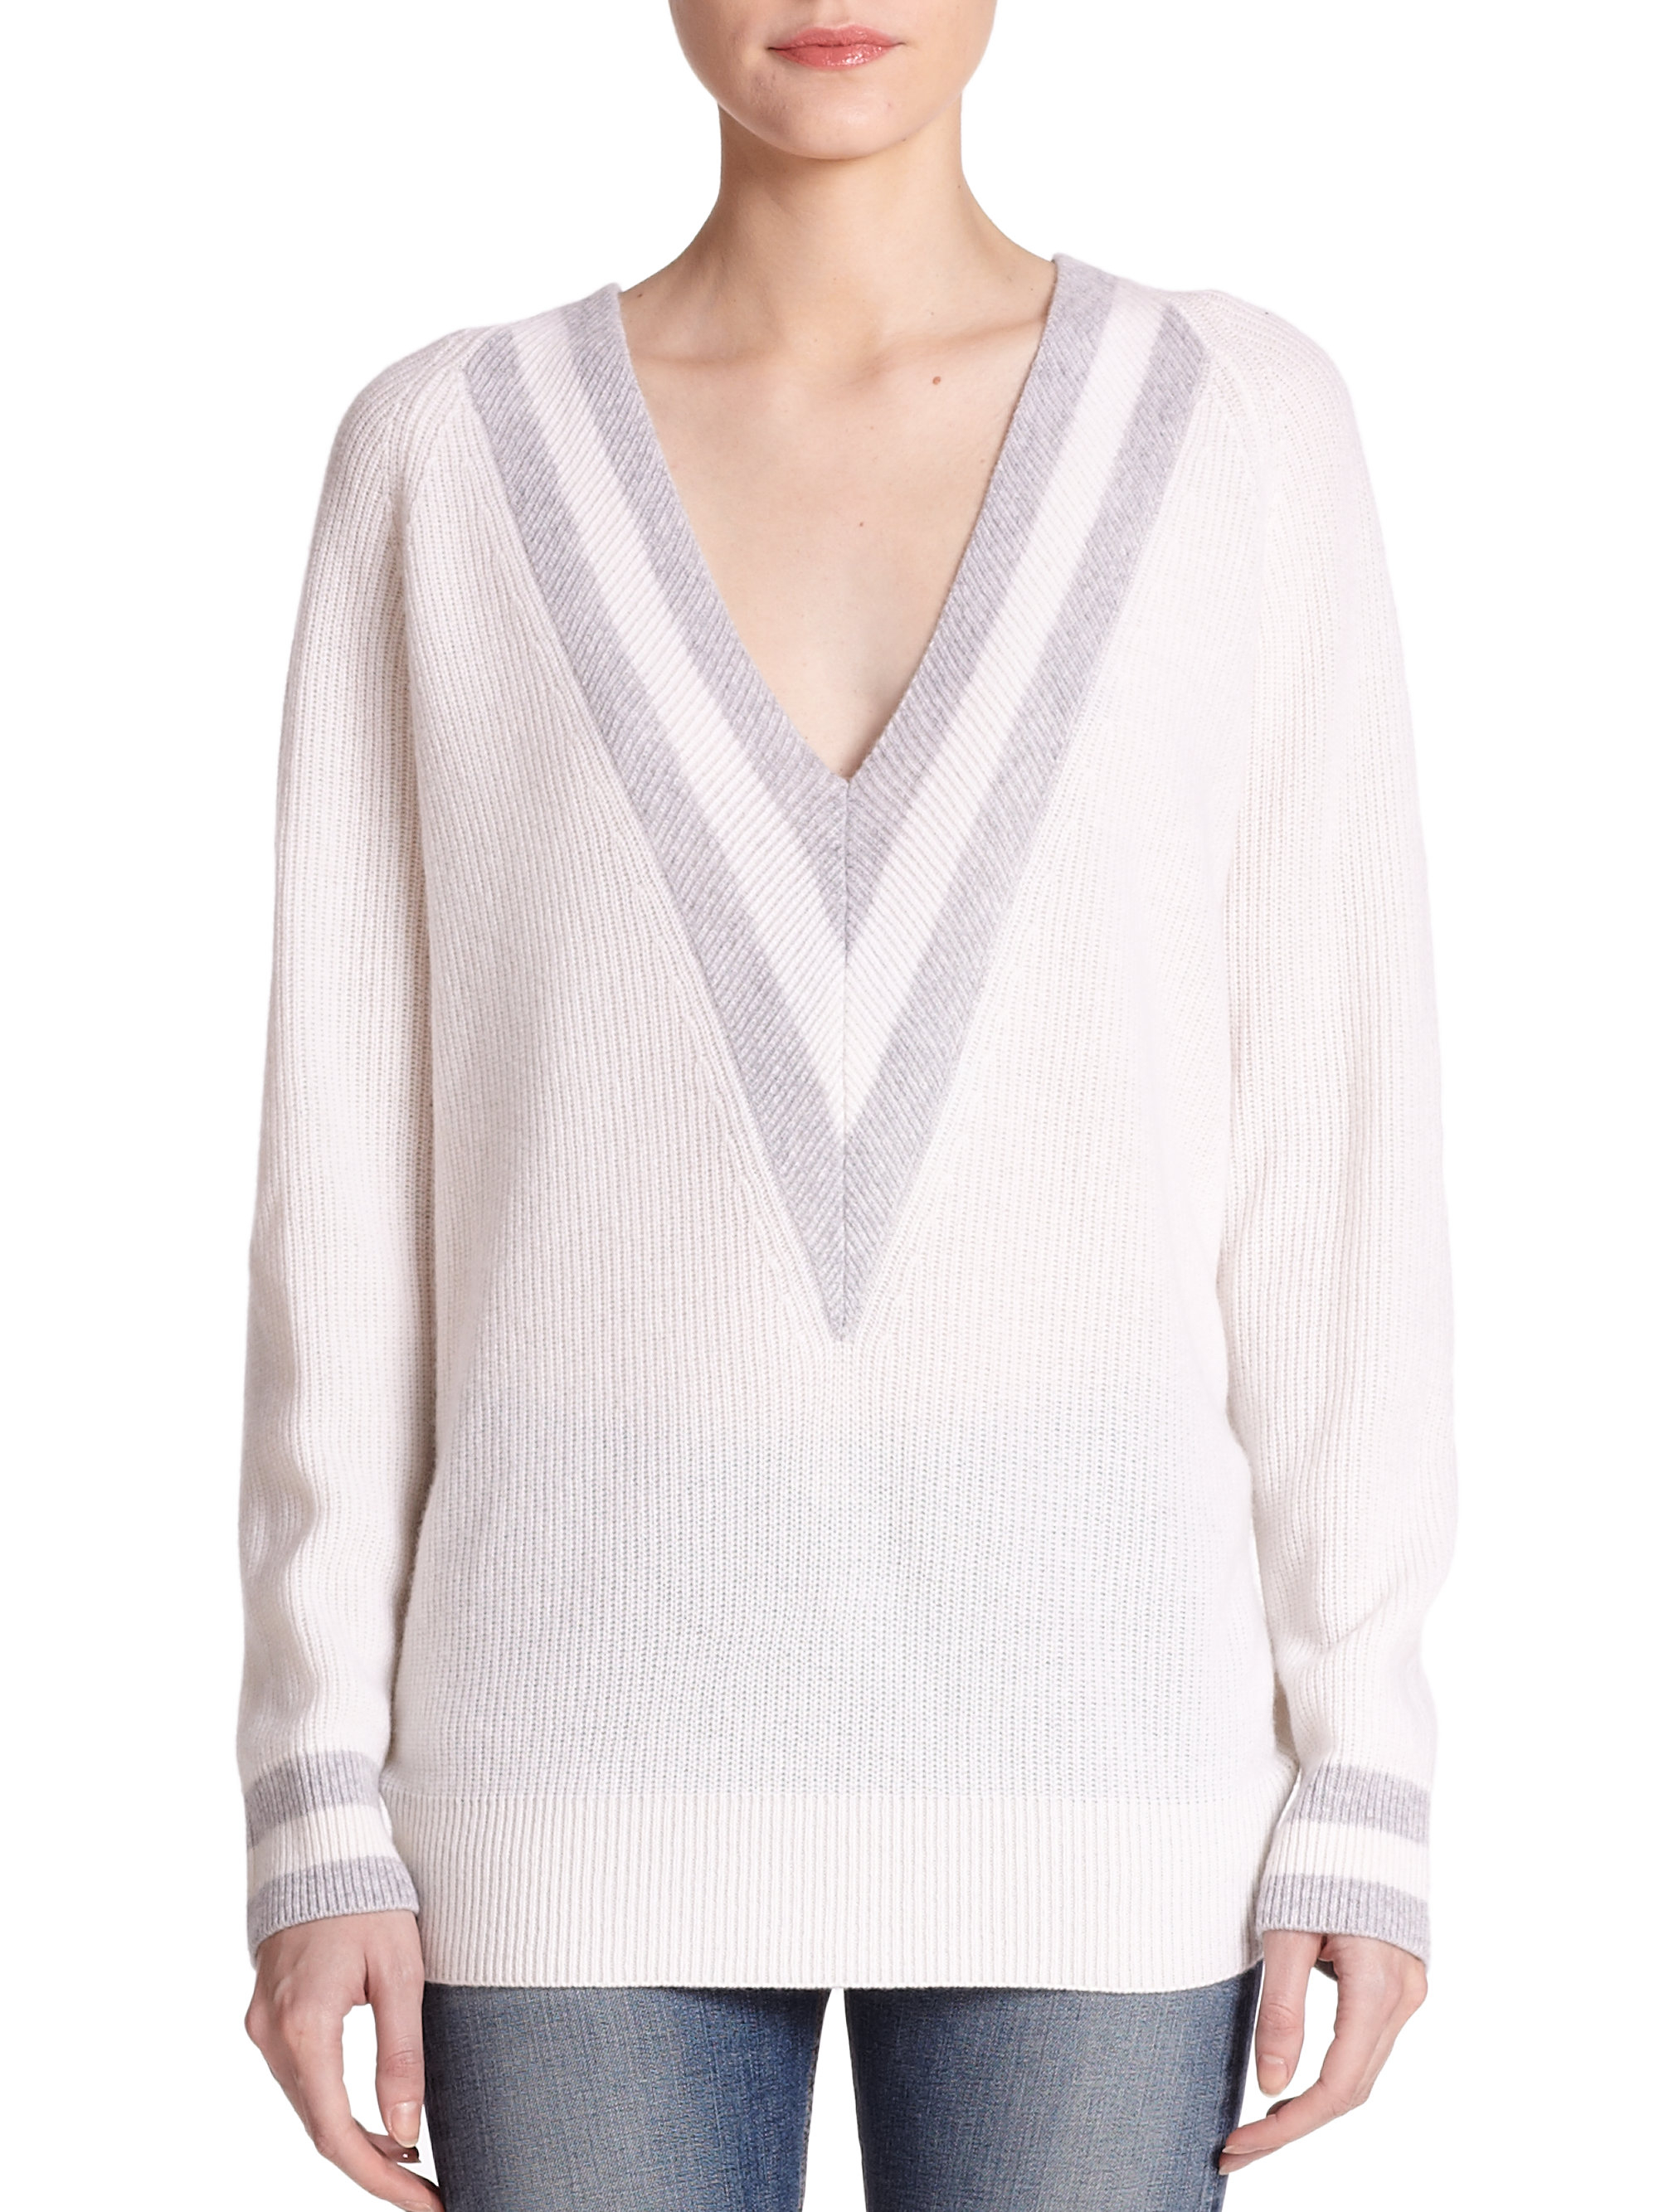 Lyst - Rag & Bone Talia Ribbed Cashmere Deep V-Neck Sweater in White